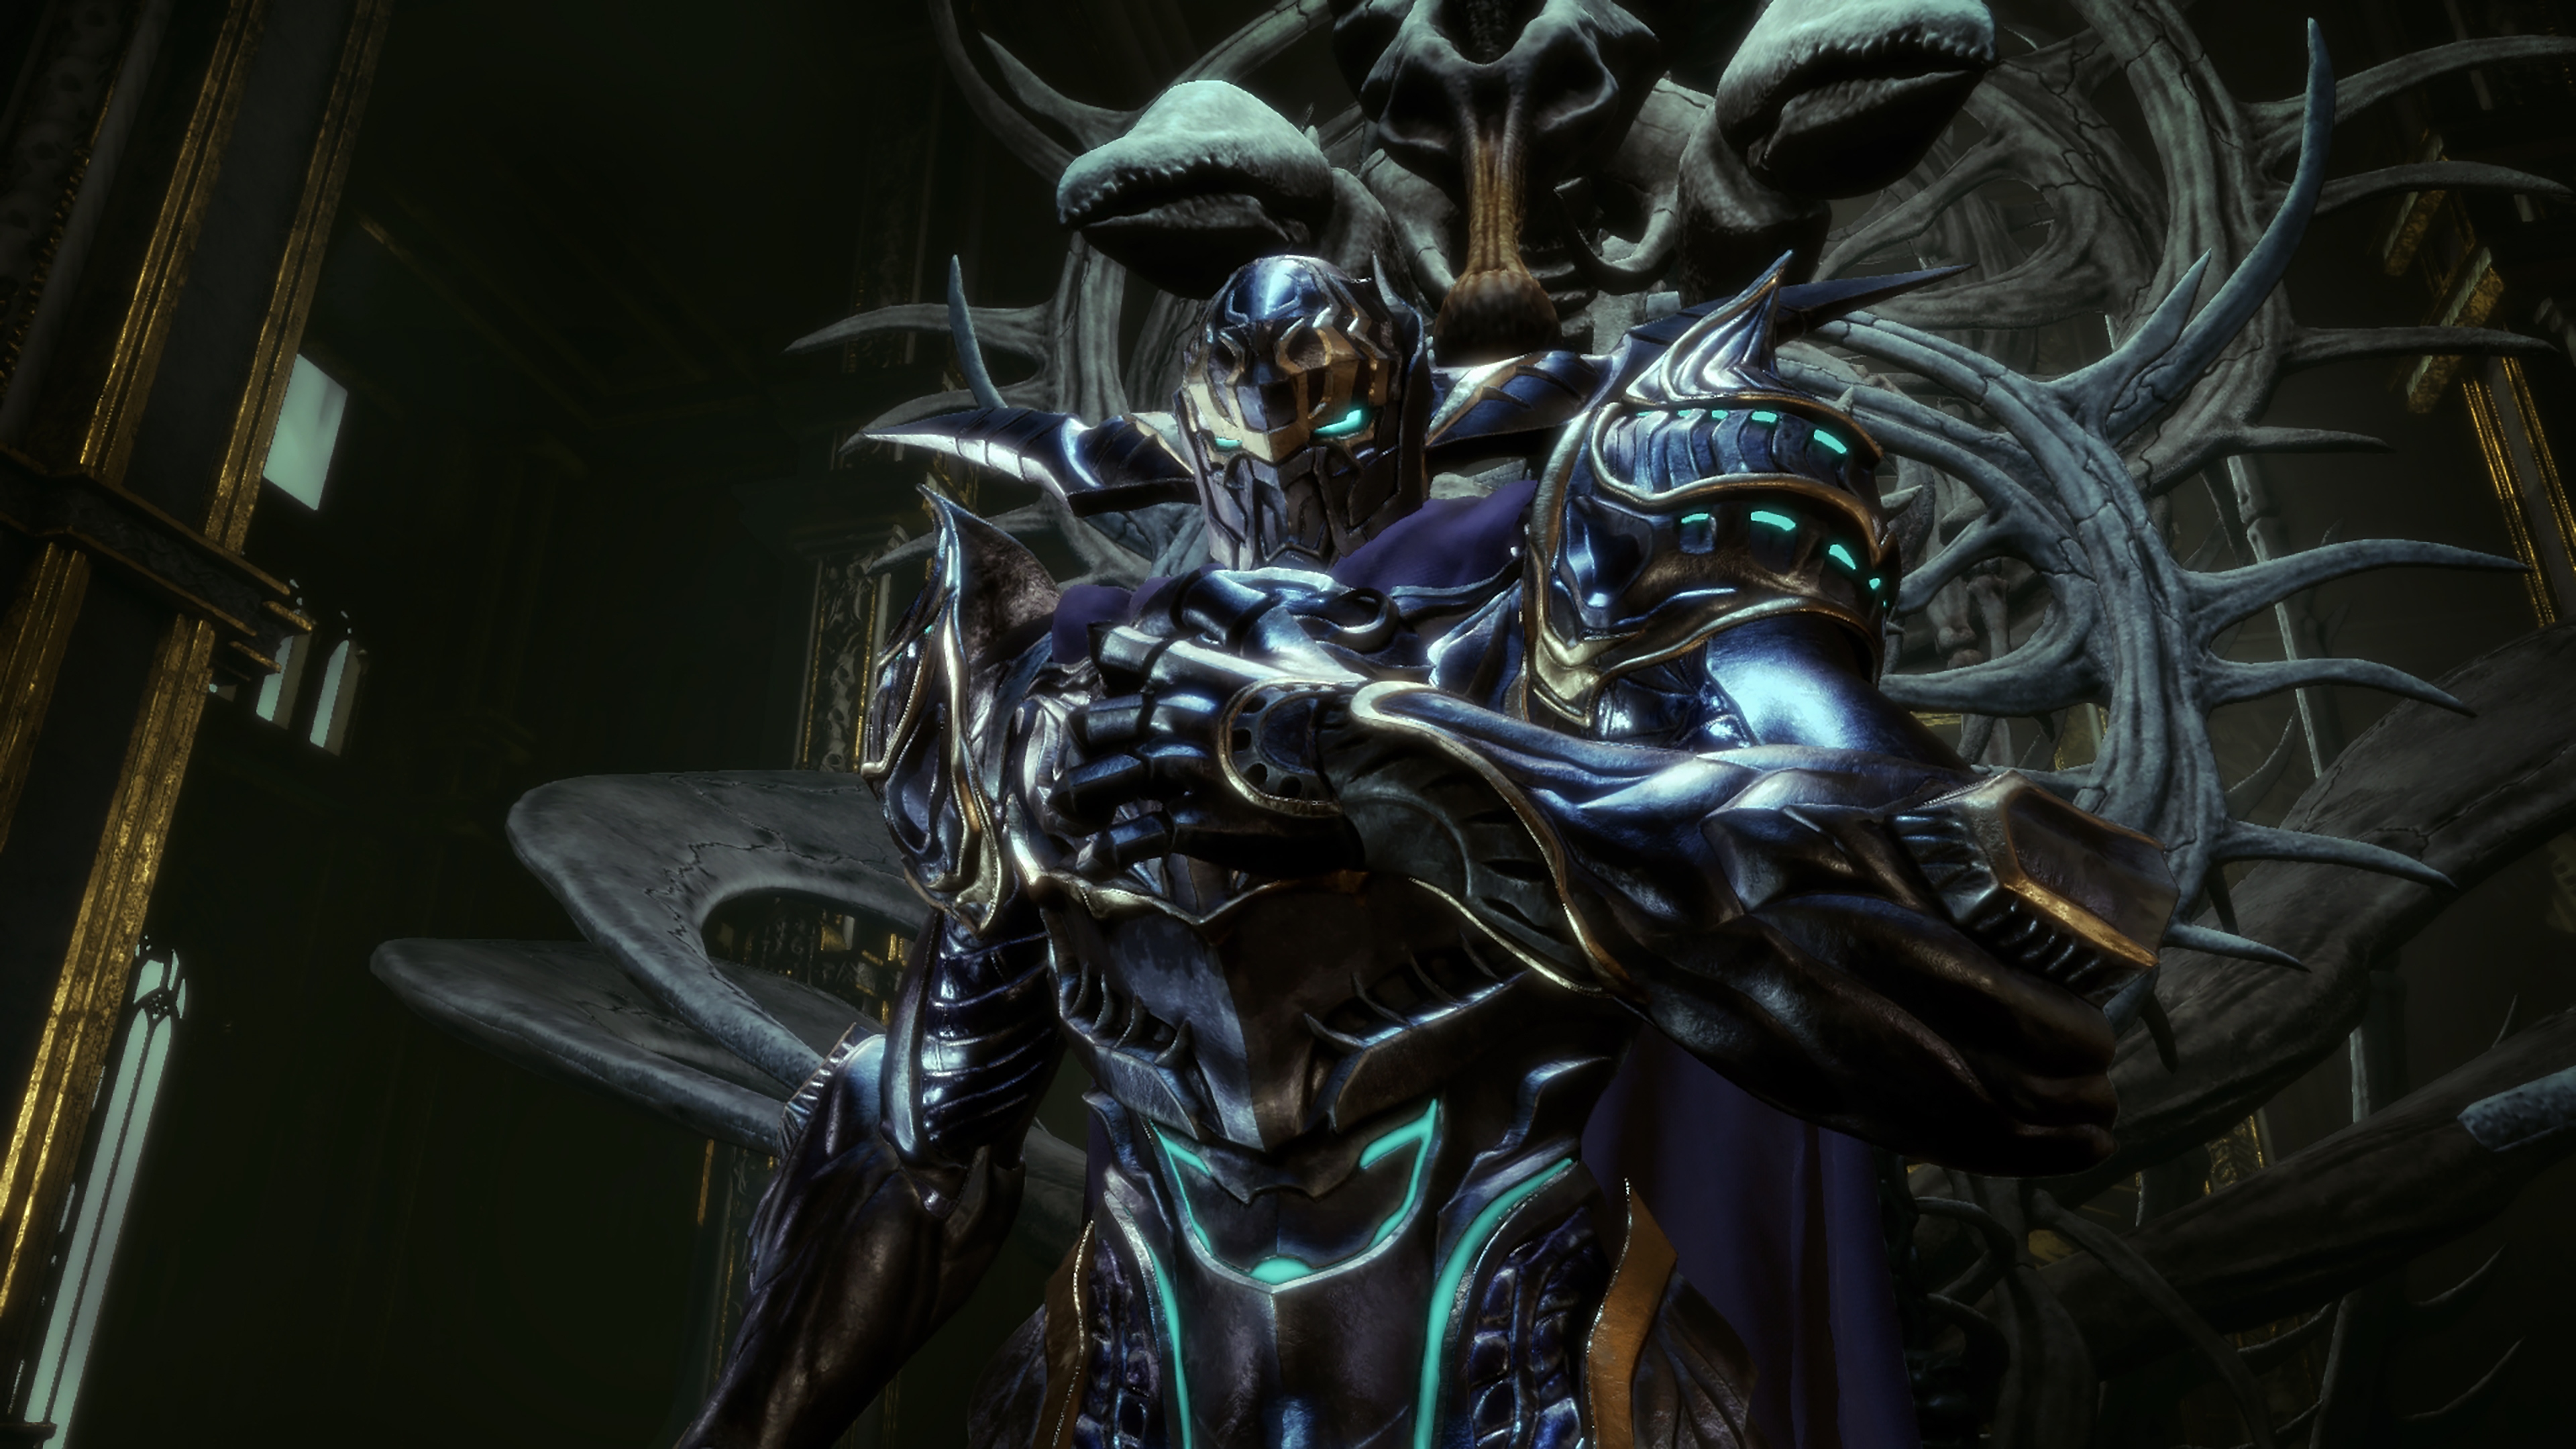 《Stranger of Paradise Final Fantasy Origin》截图展示了一名身着蓝色铠甲的角色坐在骷髅王座上